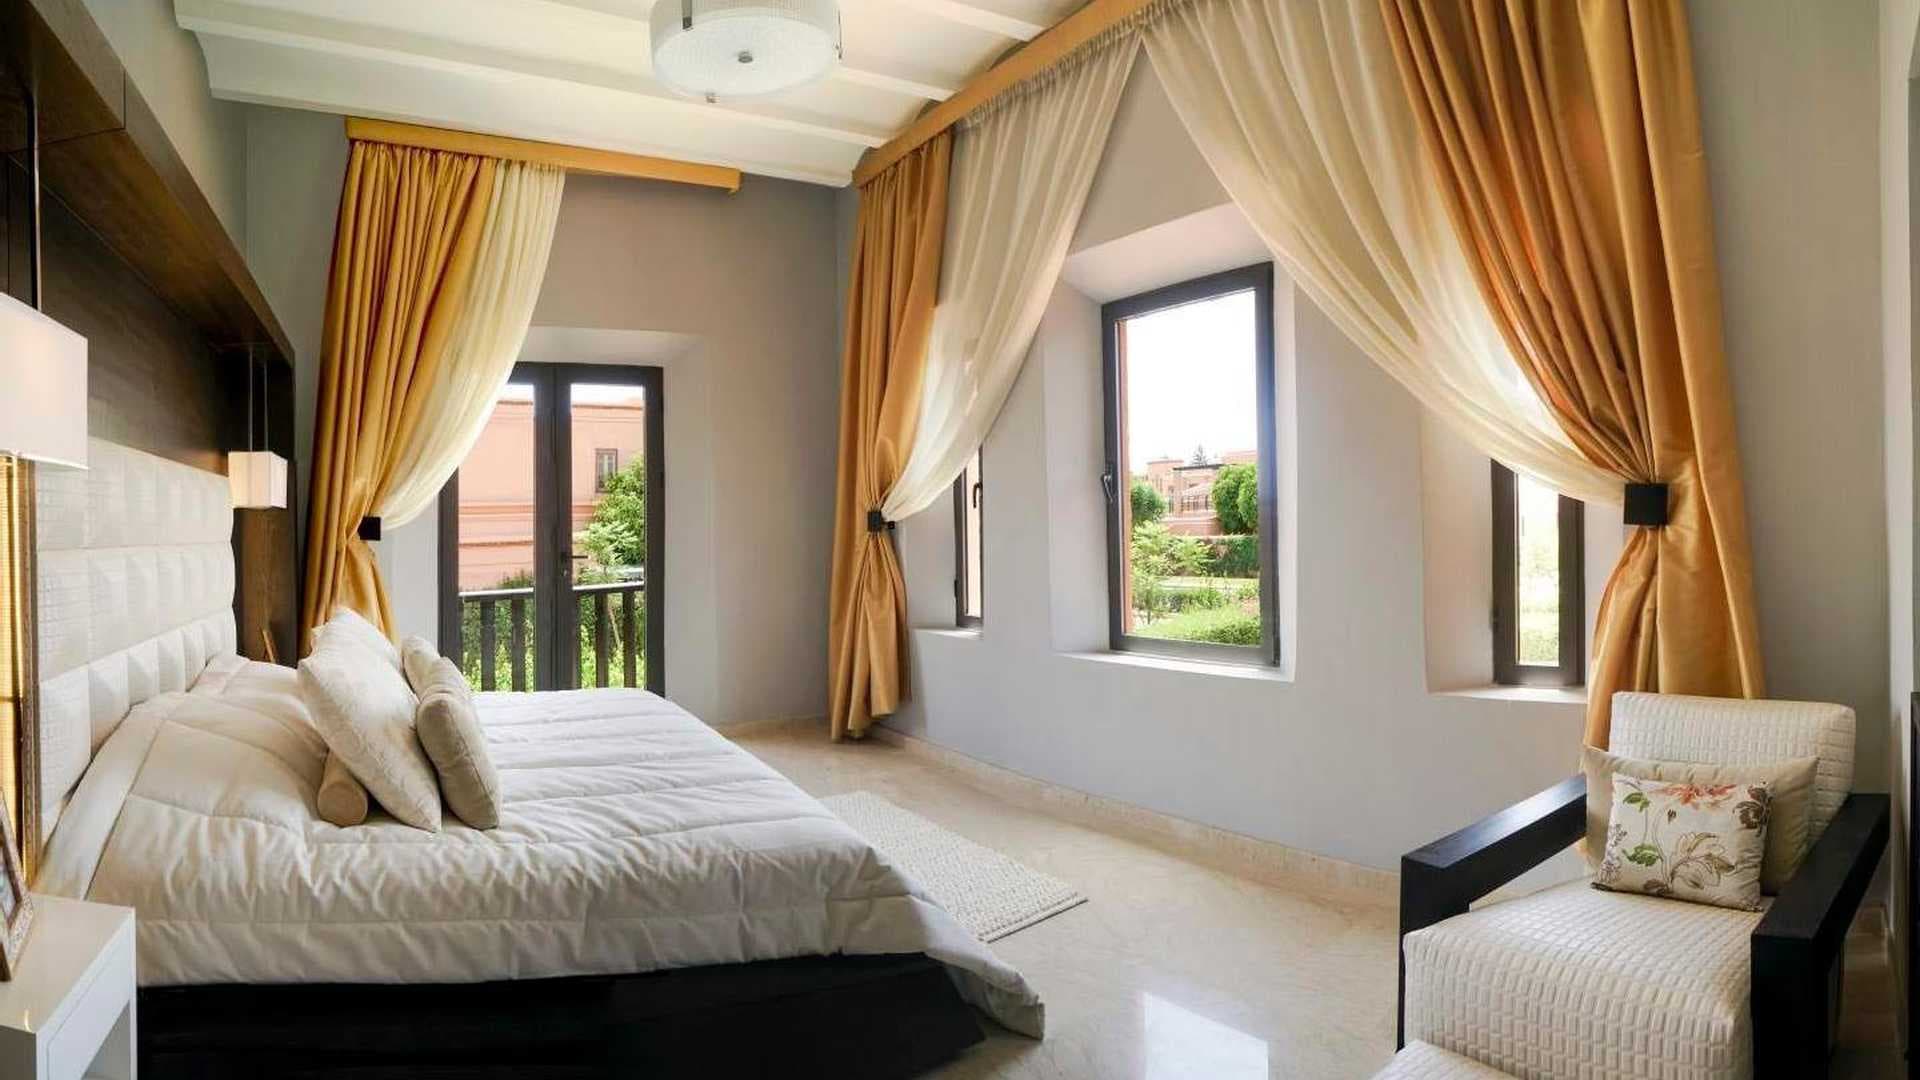 3 Bedroom Villa For Sale Mouyal Menzah Hattan Lp01071 A4526e989fa6a80.jpg